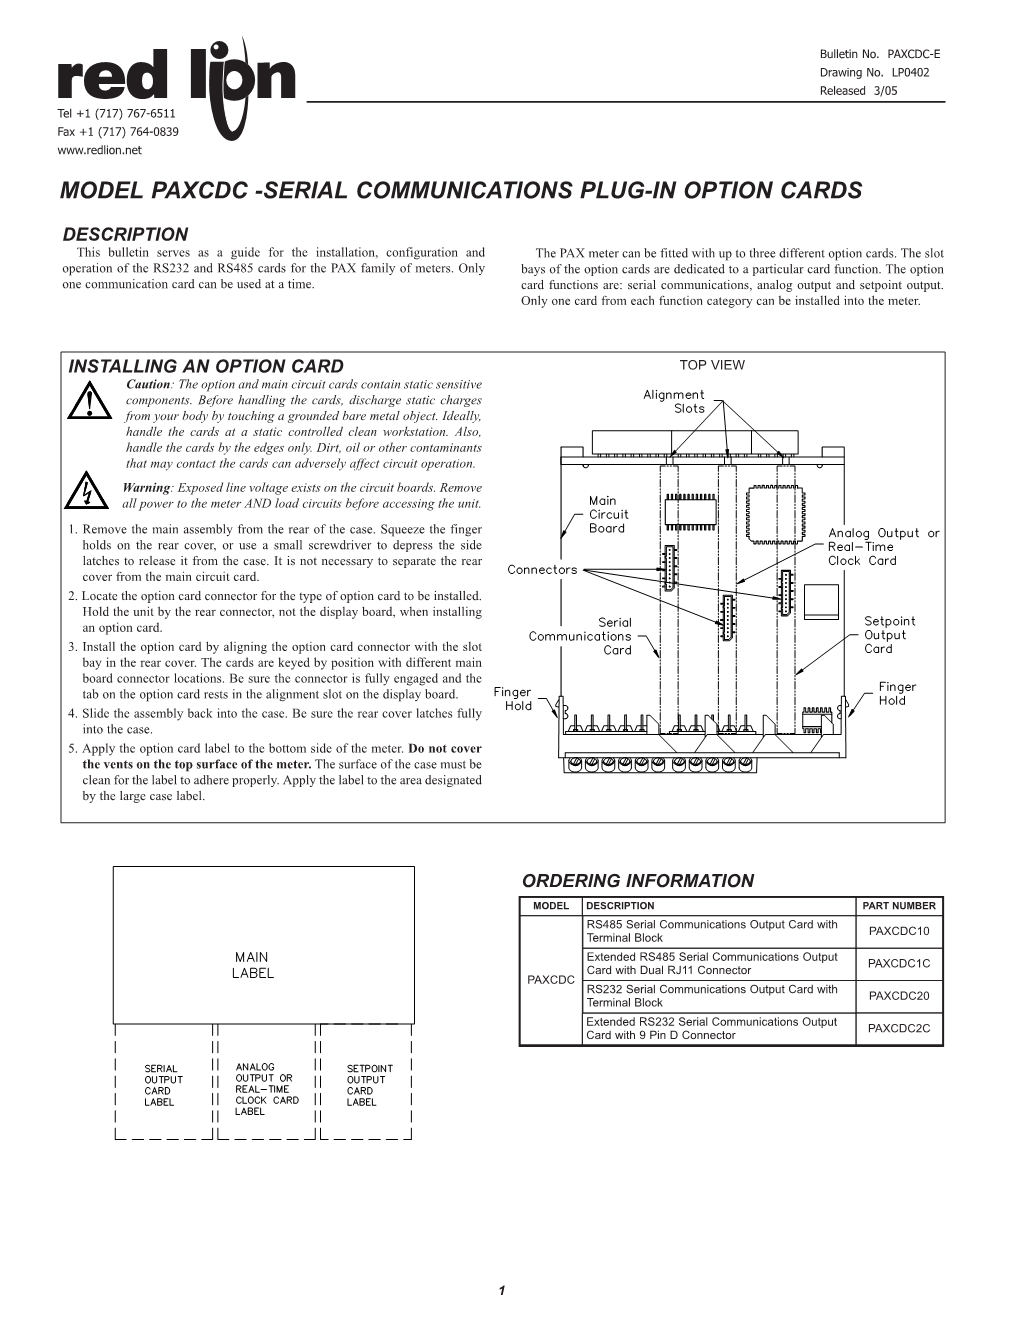 PAXCDC Data Sheet/Manual